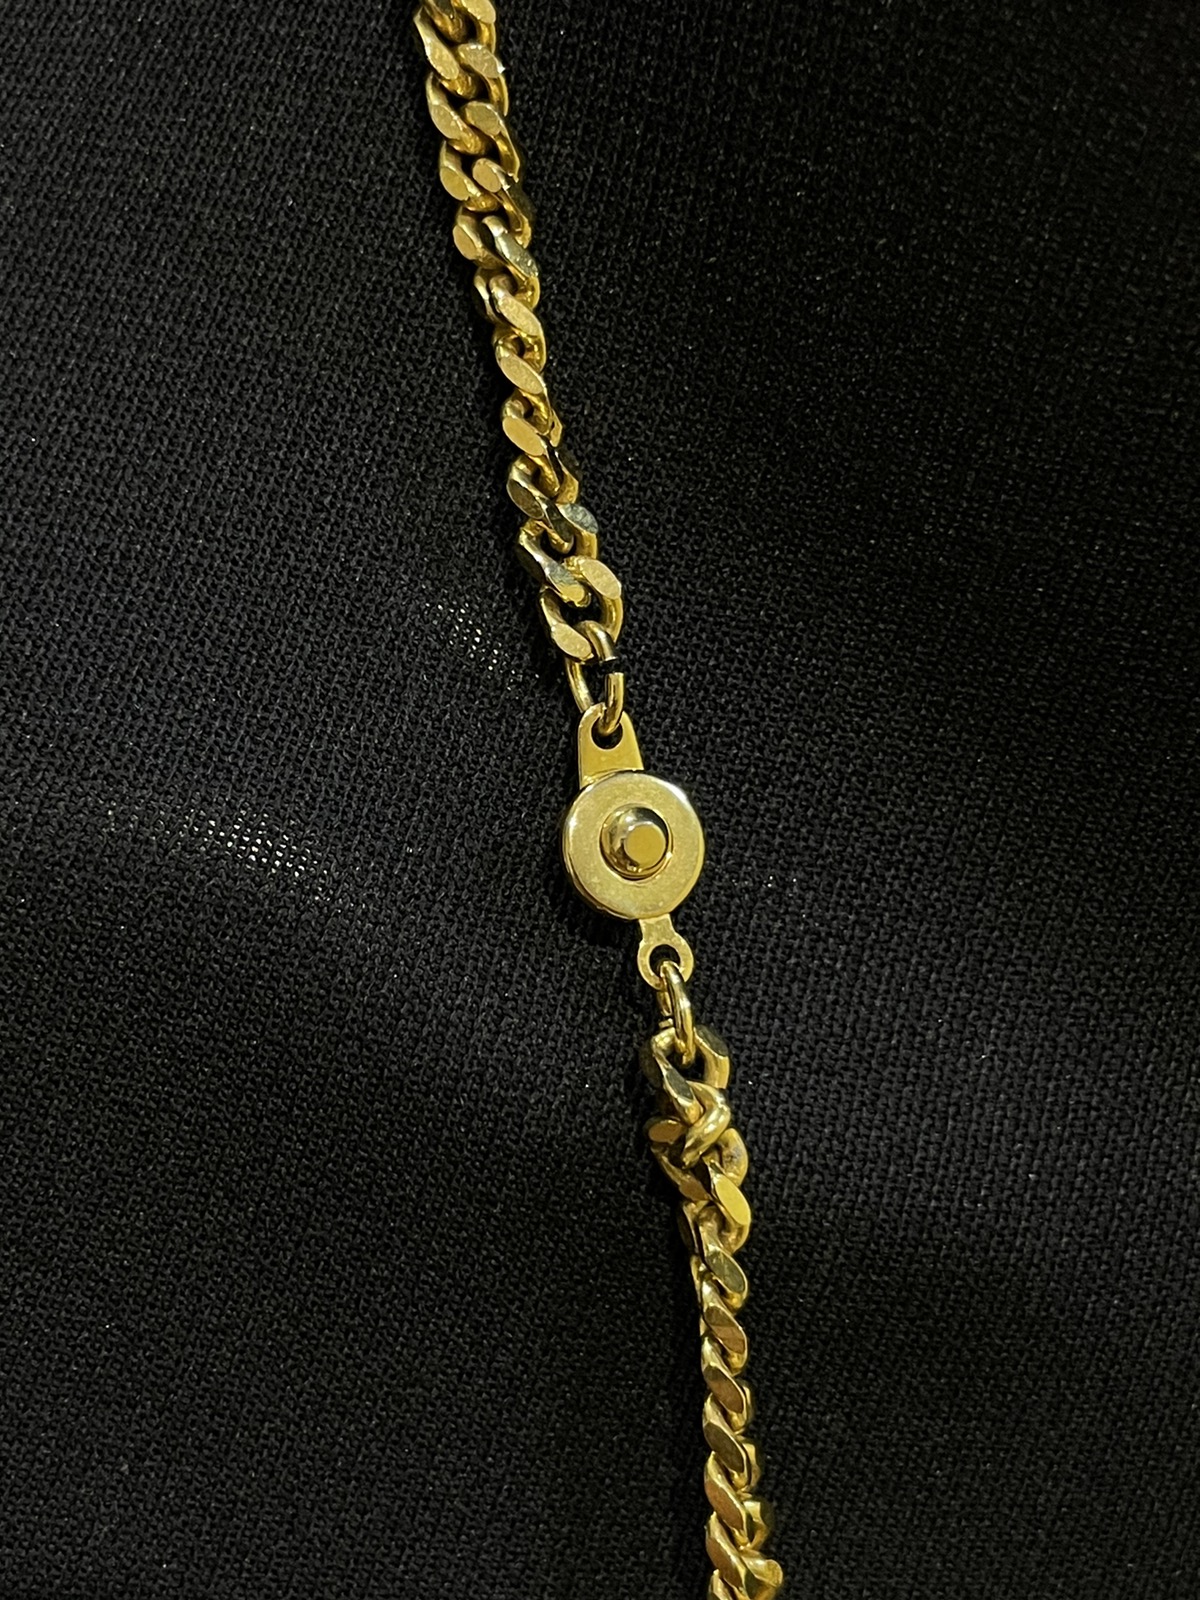 Louis Vuitton pad lock custom necklace/ chain gold - 8